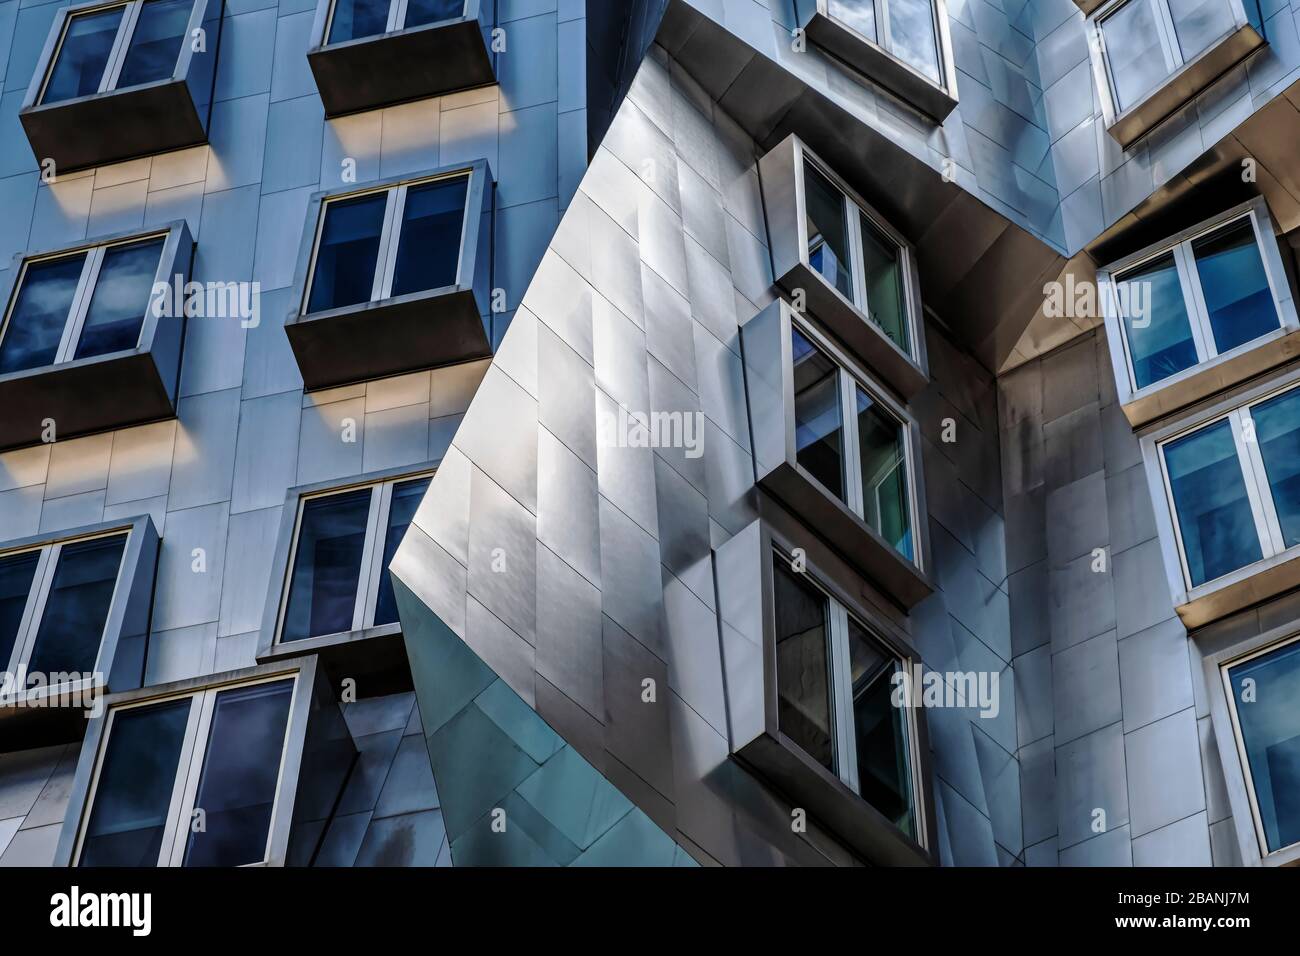 The Ray and Maria Strata Center, mit, Boston. Entworfen von Architekt Frank Gehry. Stockfoto